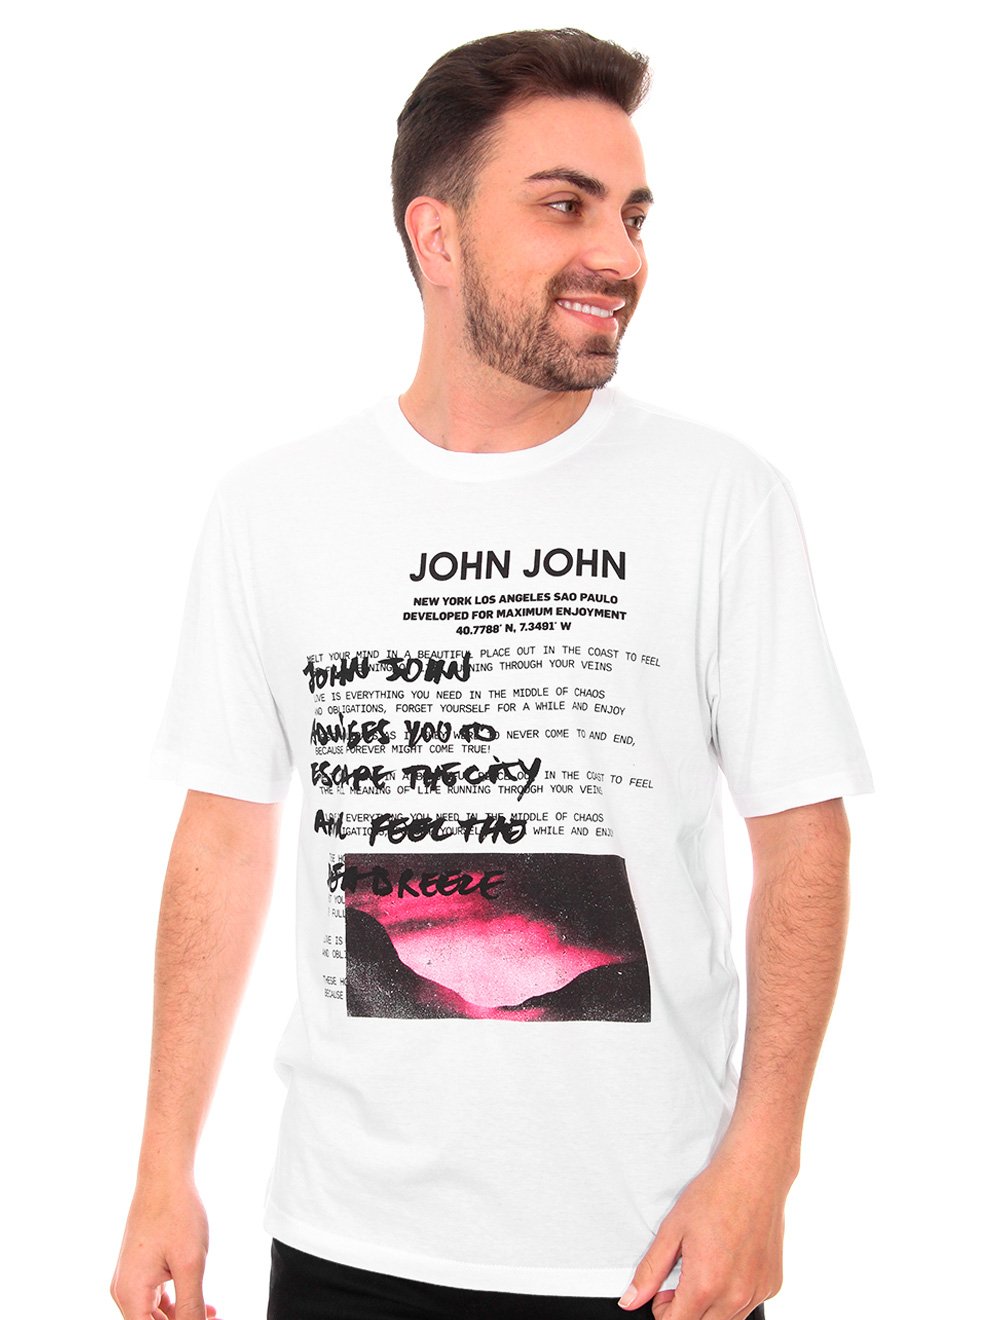 Camiseta John John Masculina Relaxed Puffed Logo Preta 